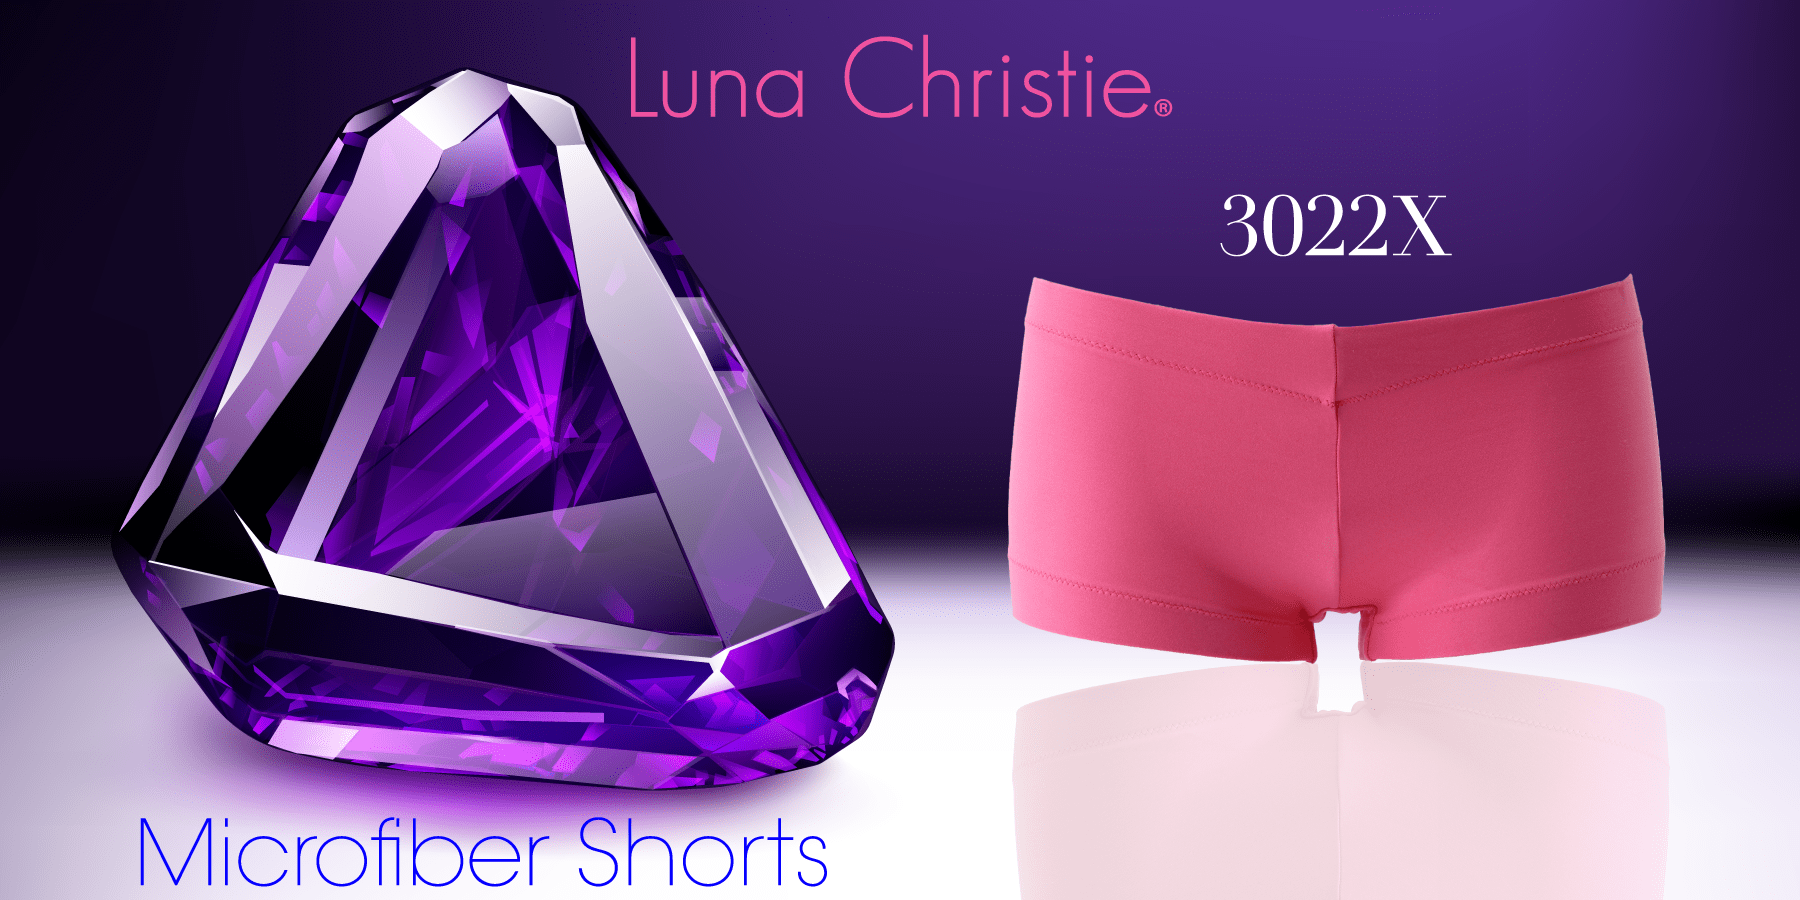 Luna Christie kv3088Xcpdm